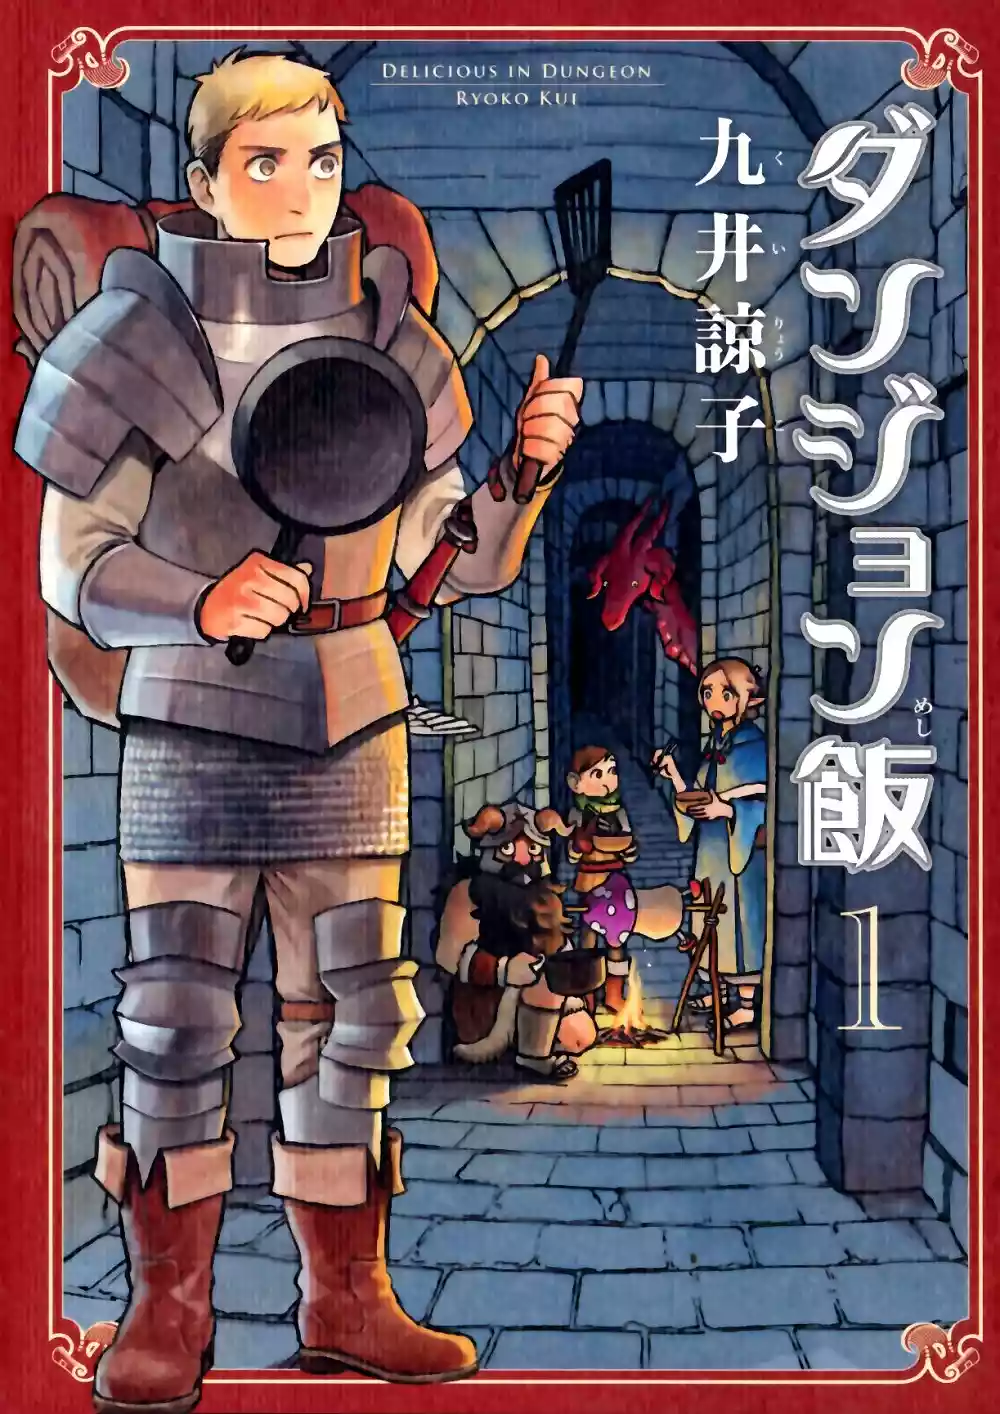 Dungeon meshi manga cover